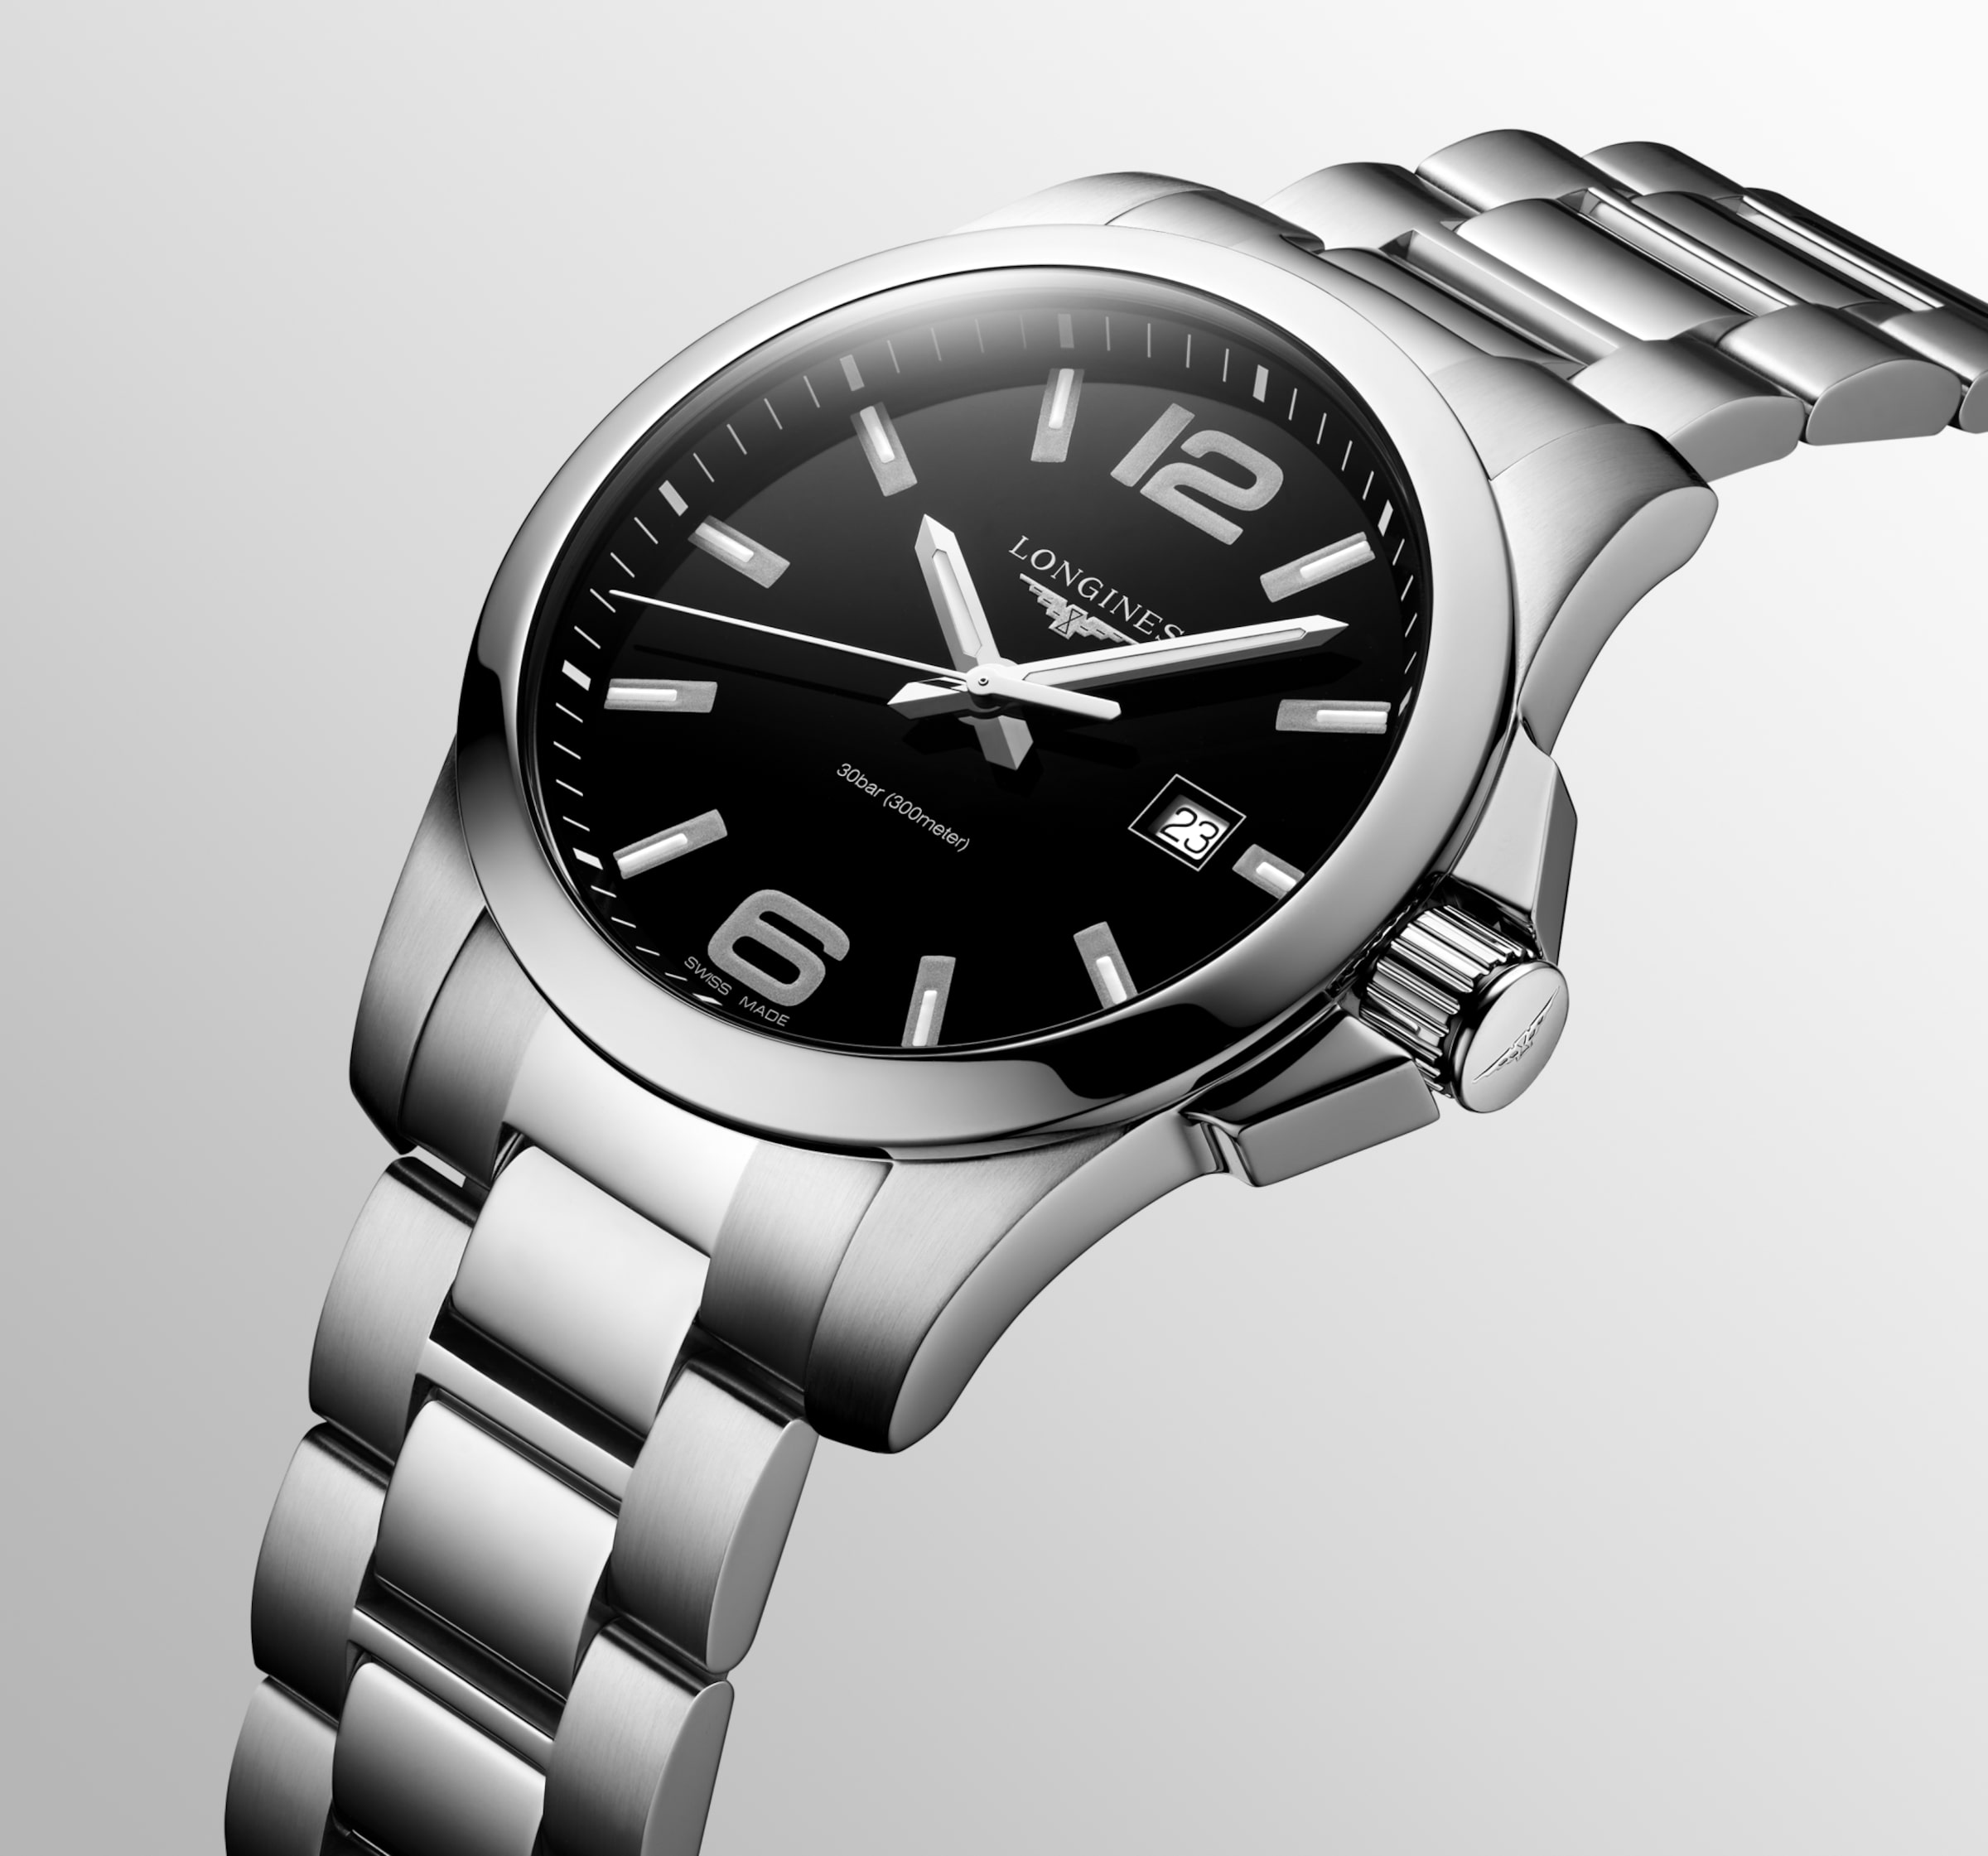 Longines CONQUEST Quartz Stainless steel Watch - L3.760.4.56.6